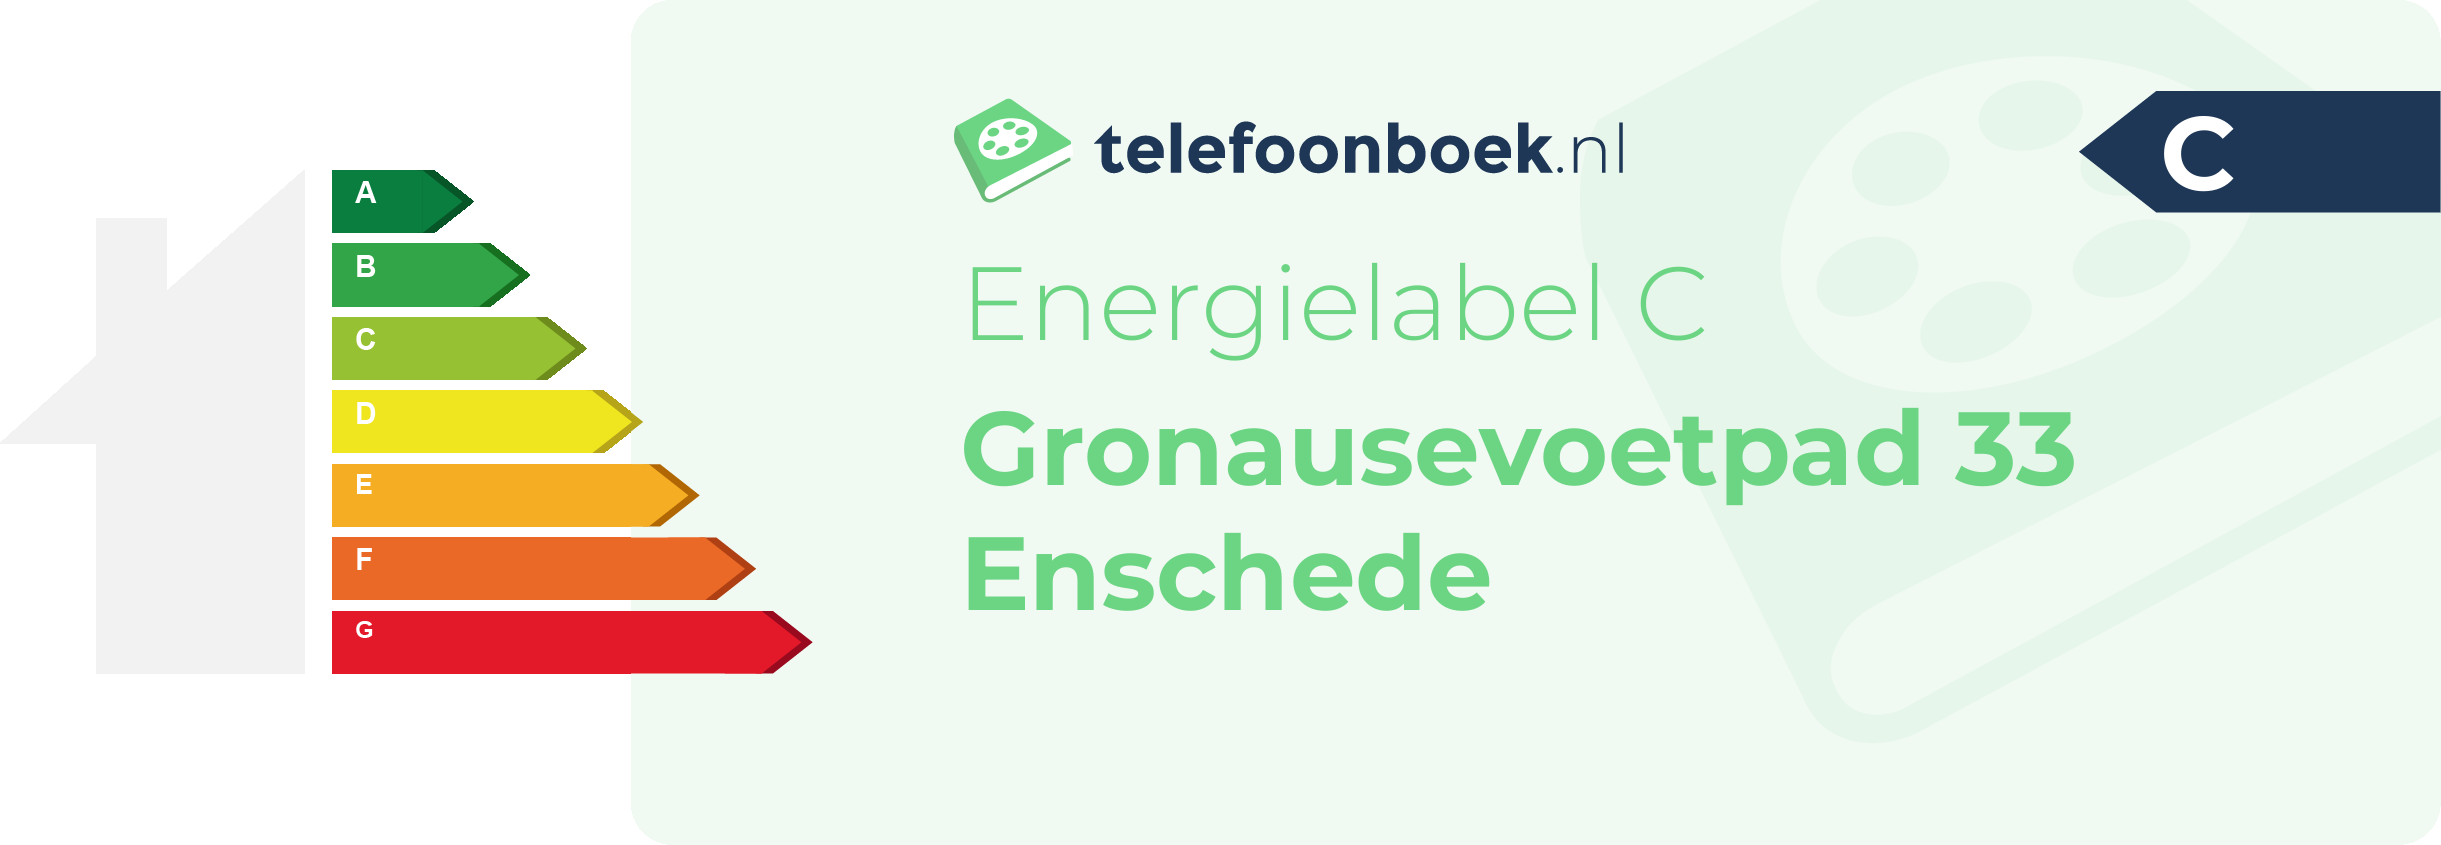 Energielabel Gronausevoetpad 33 Enschede